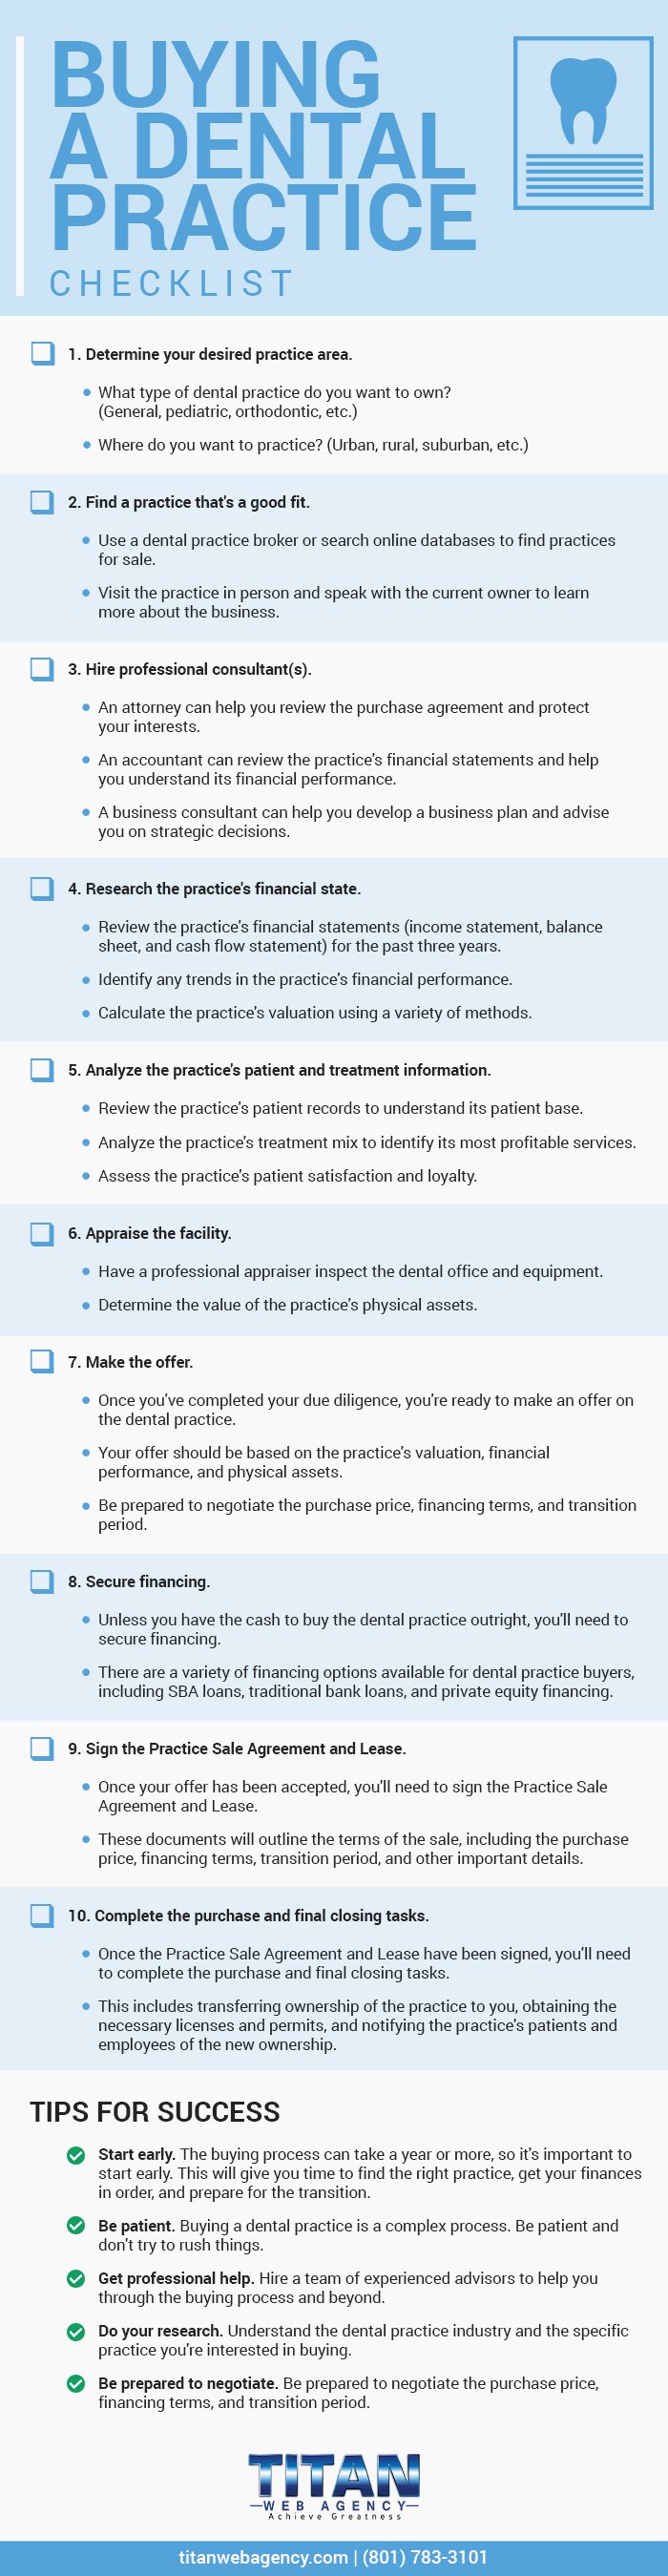 Buying a dental practice checklist